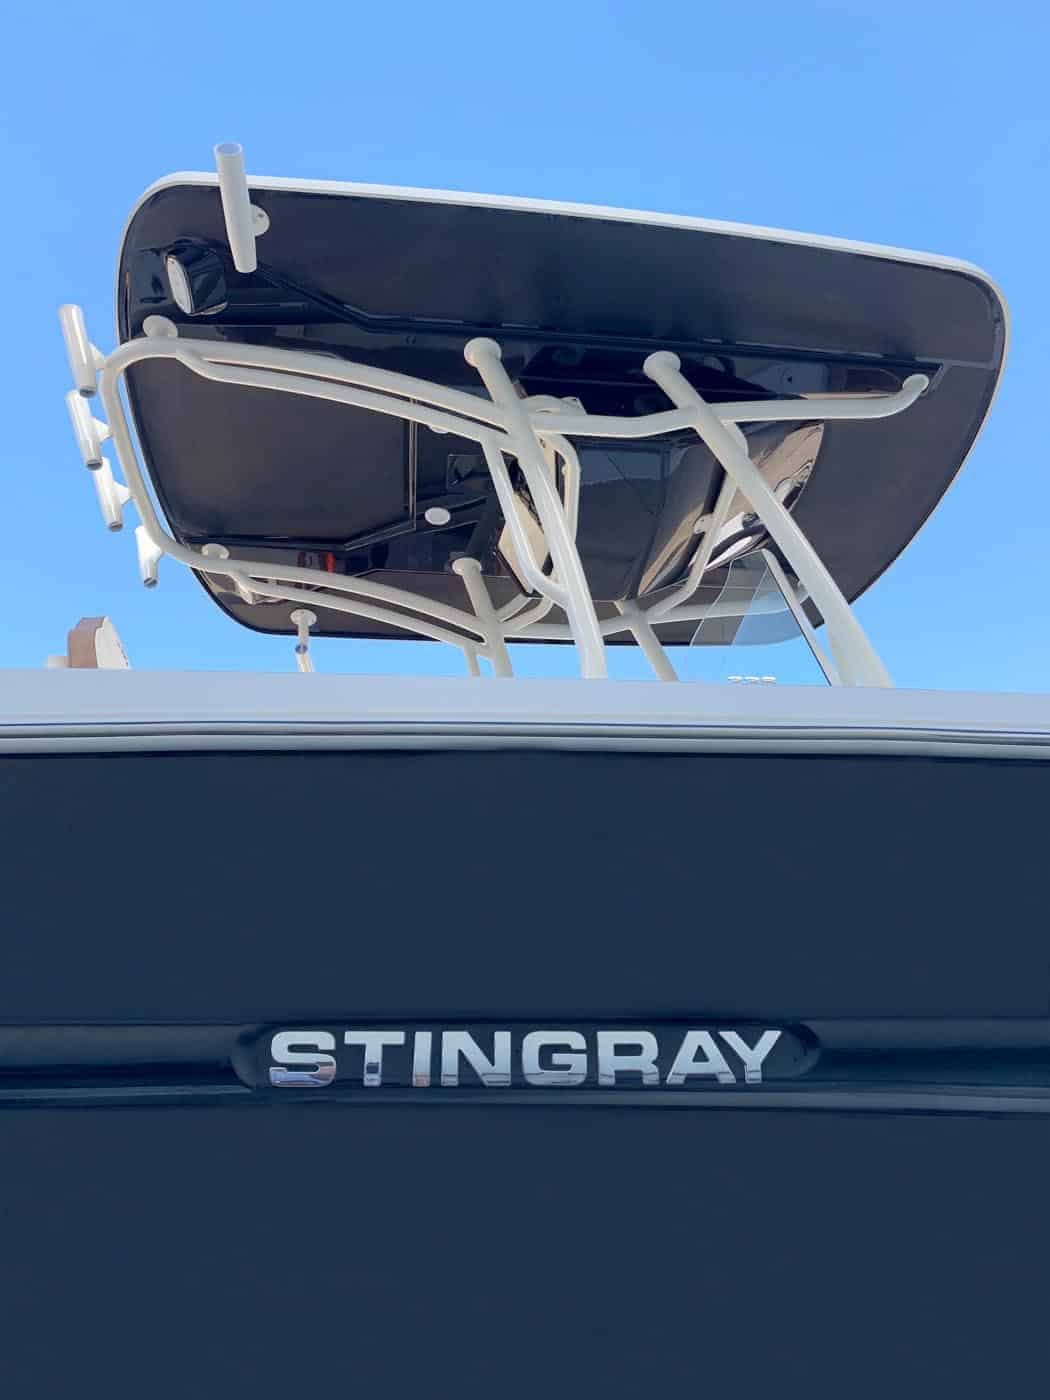 https://stingrayboats.com/wp-content/uploads/2020/01/stingray-boats-236cc-detail-016.jpg